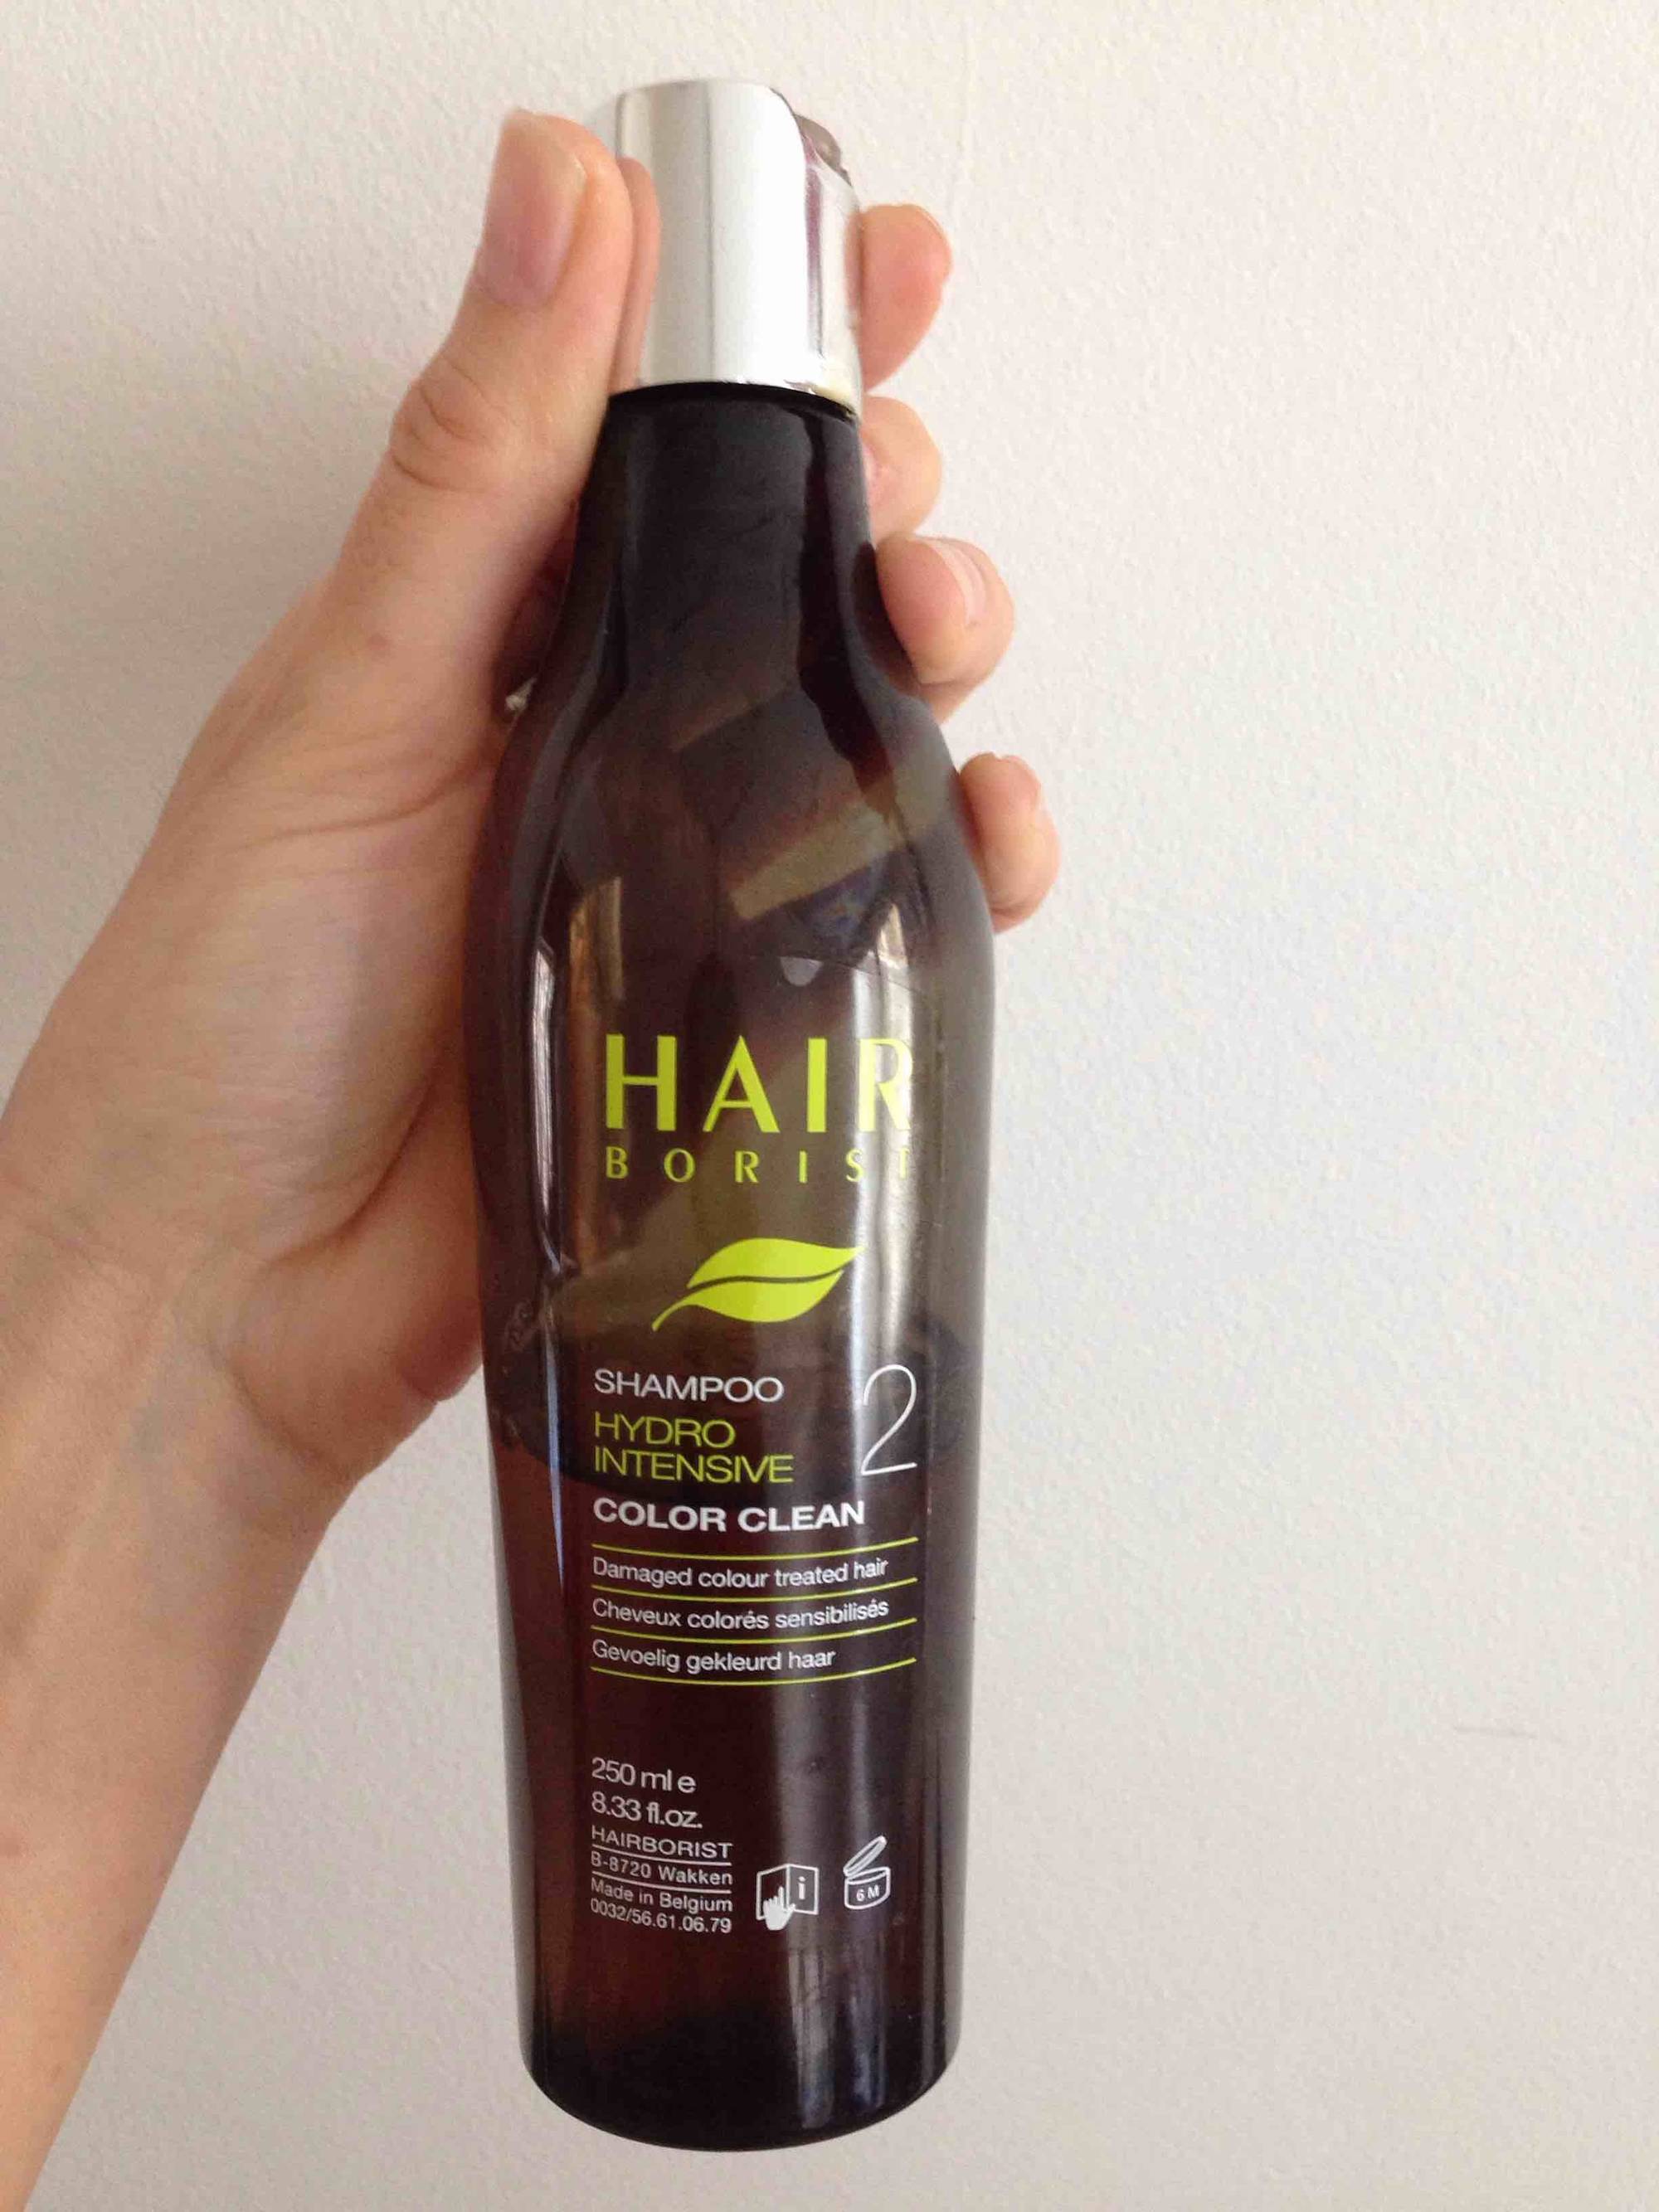 HAIR BORIST - Shampoo hydro intesive 2 - Color Clean